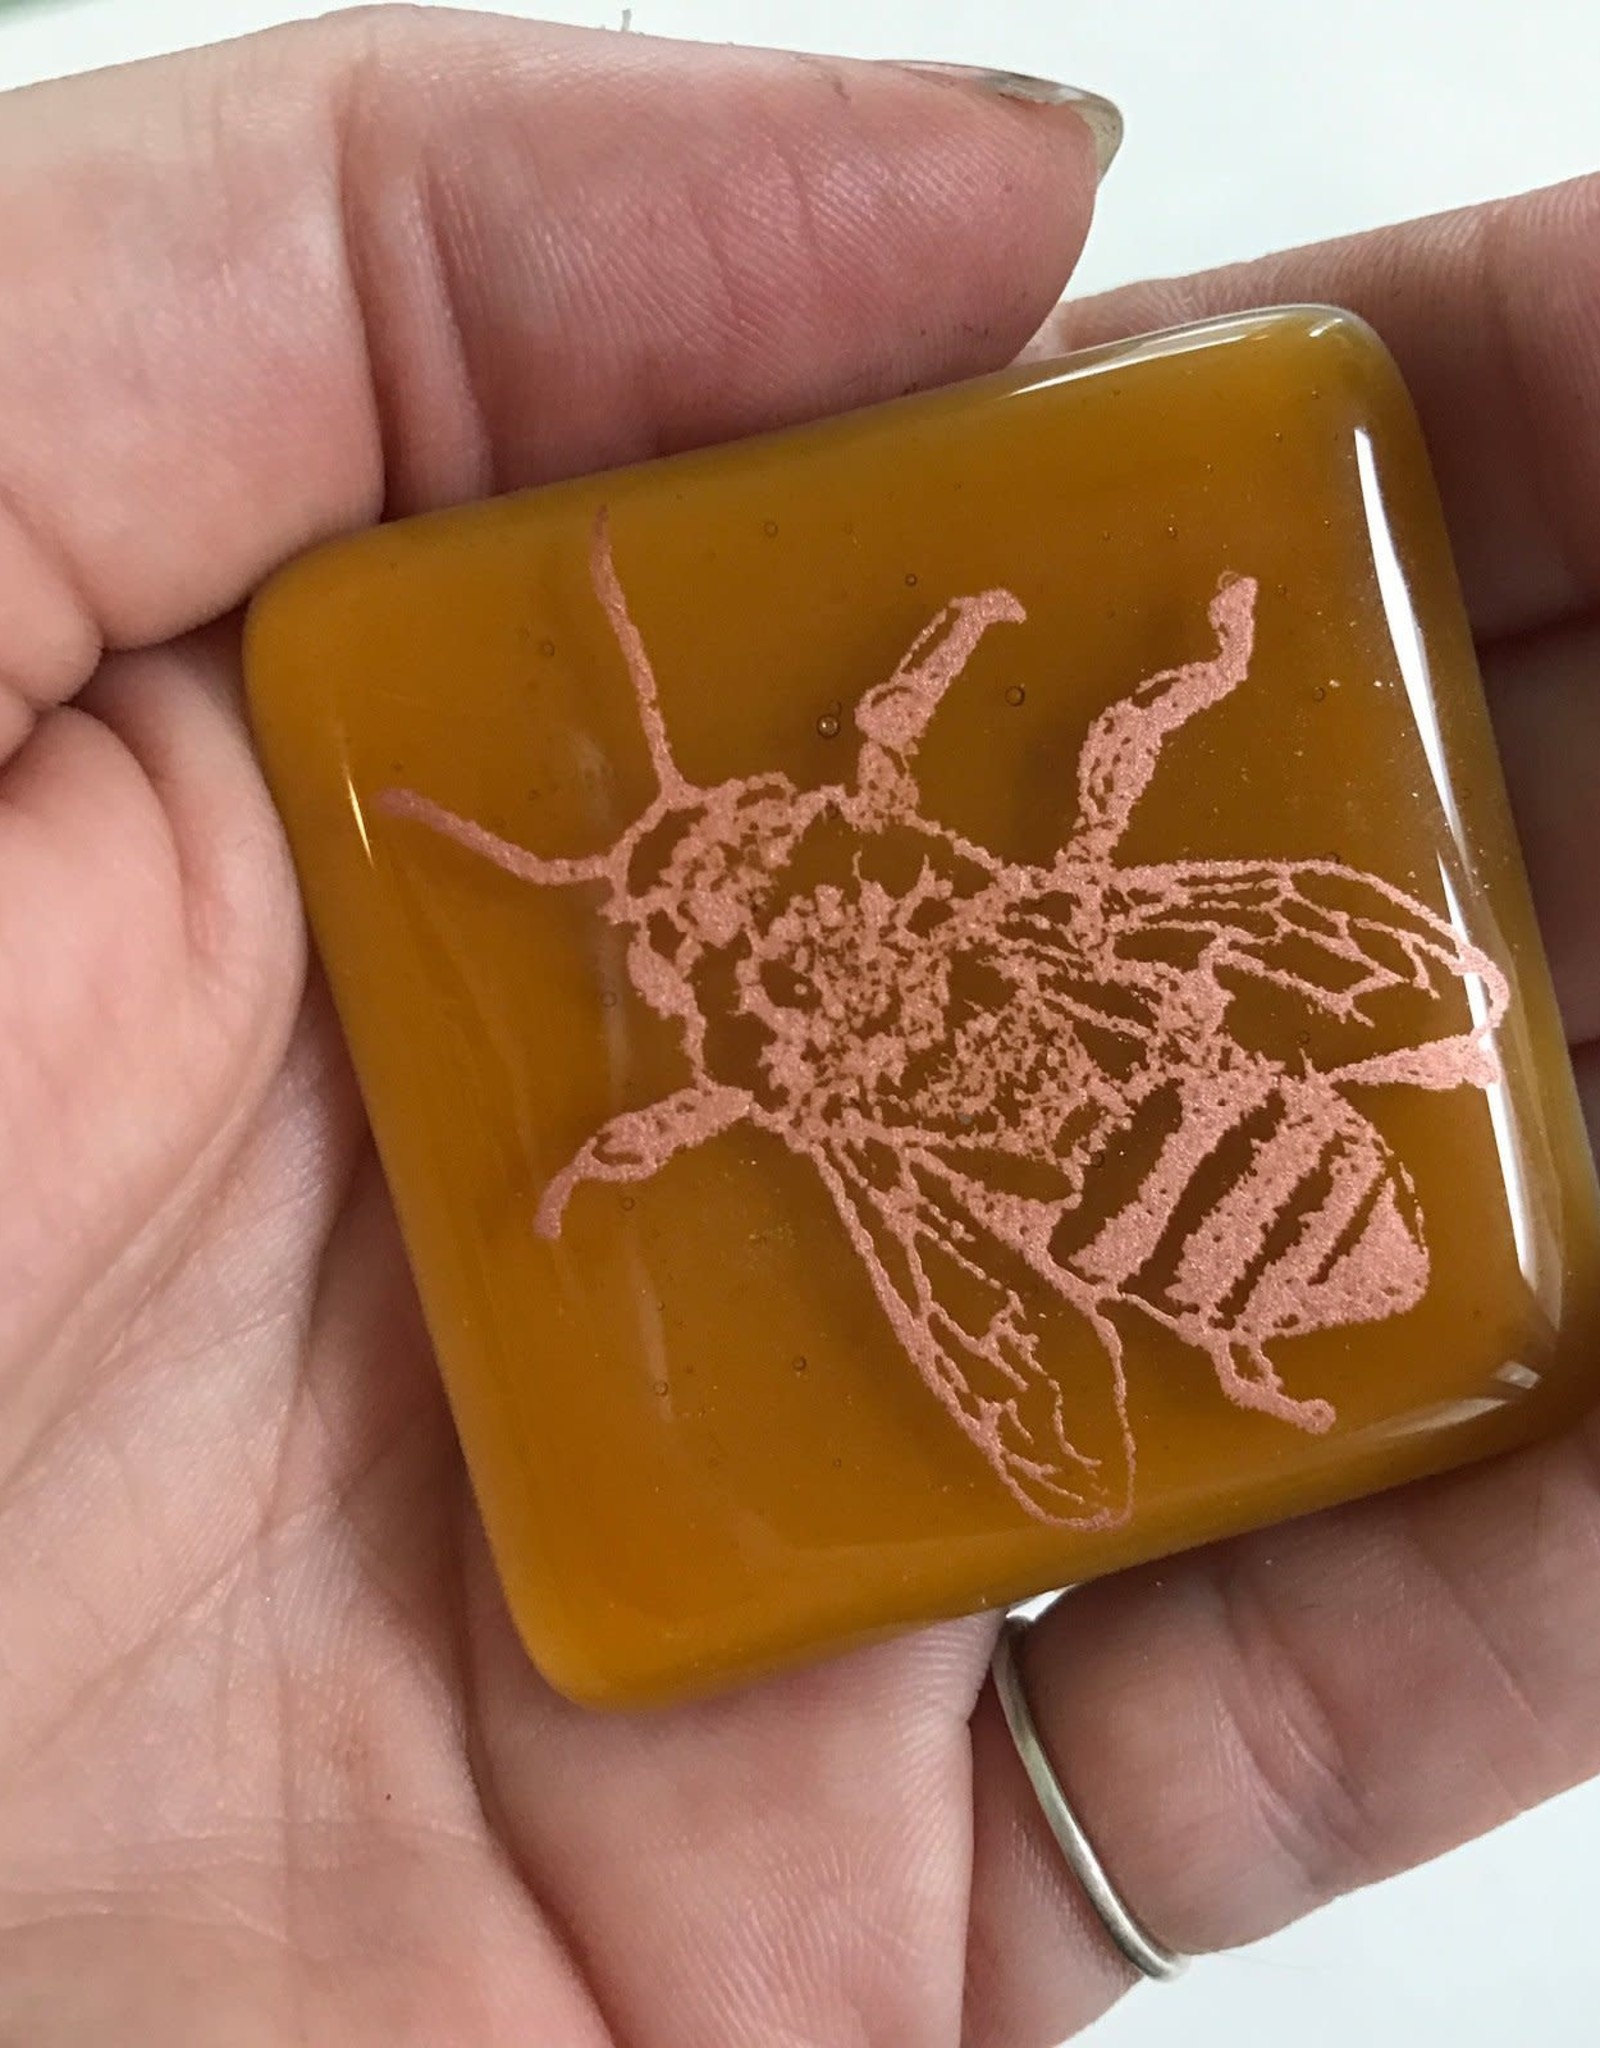 Kiku Handmade Fused Glass Magnet | Honeybee